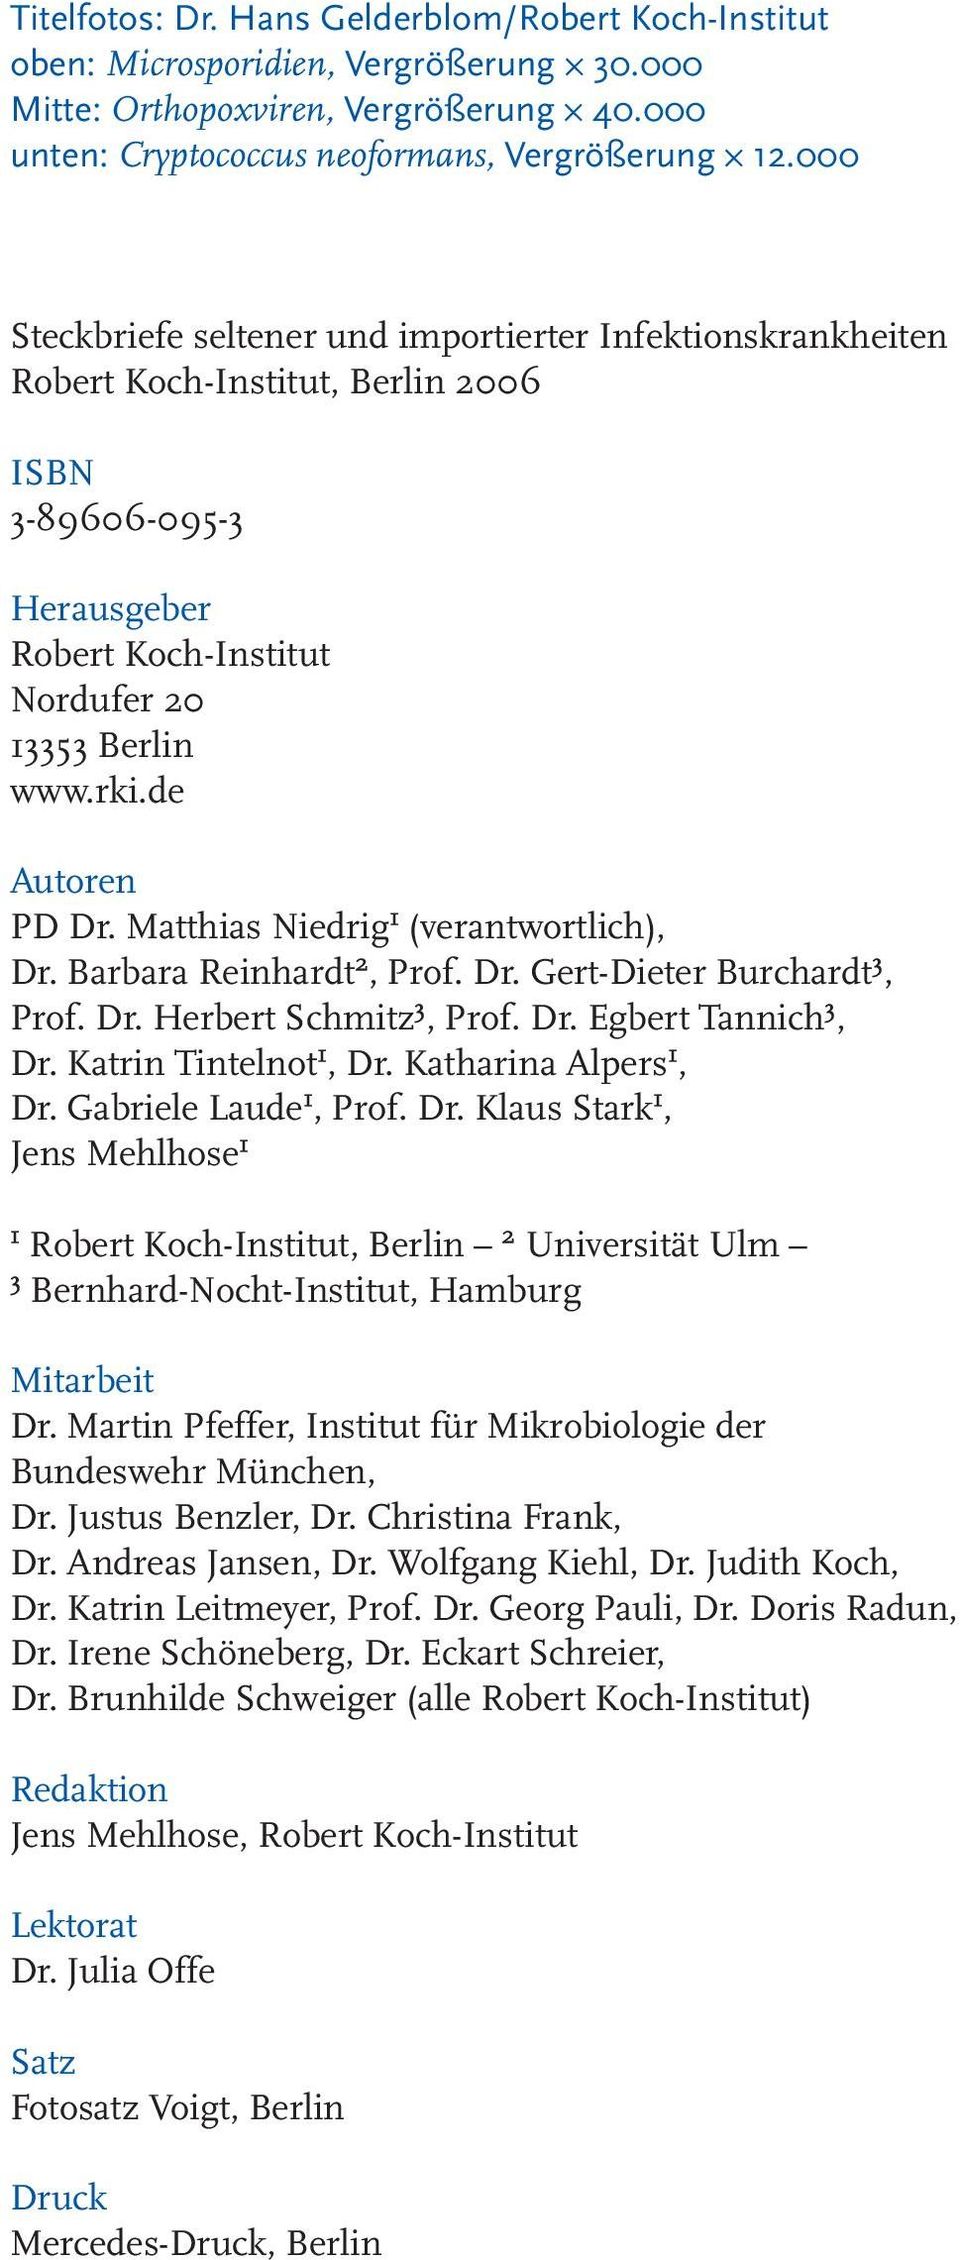 Matthias Niedrig1 (verantwortlich), Dr. Barbara Reinhardt2, Prof. Dr. Gert-Dieter Burchardt3, Prof. Dr. Herbert Schmitz3, Prof. Dr. Egbert Tannich3, Dr. Katrin Tintelnot1, Dr. Katharina Alpers1, Dr.